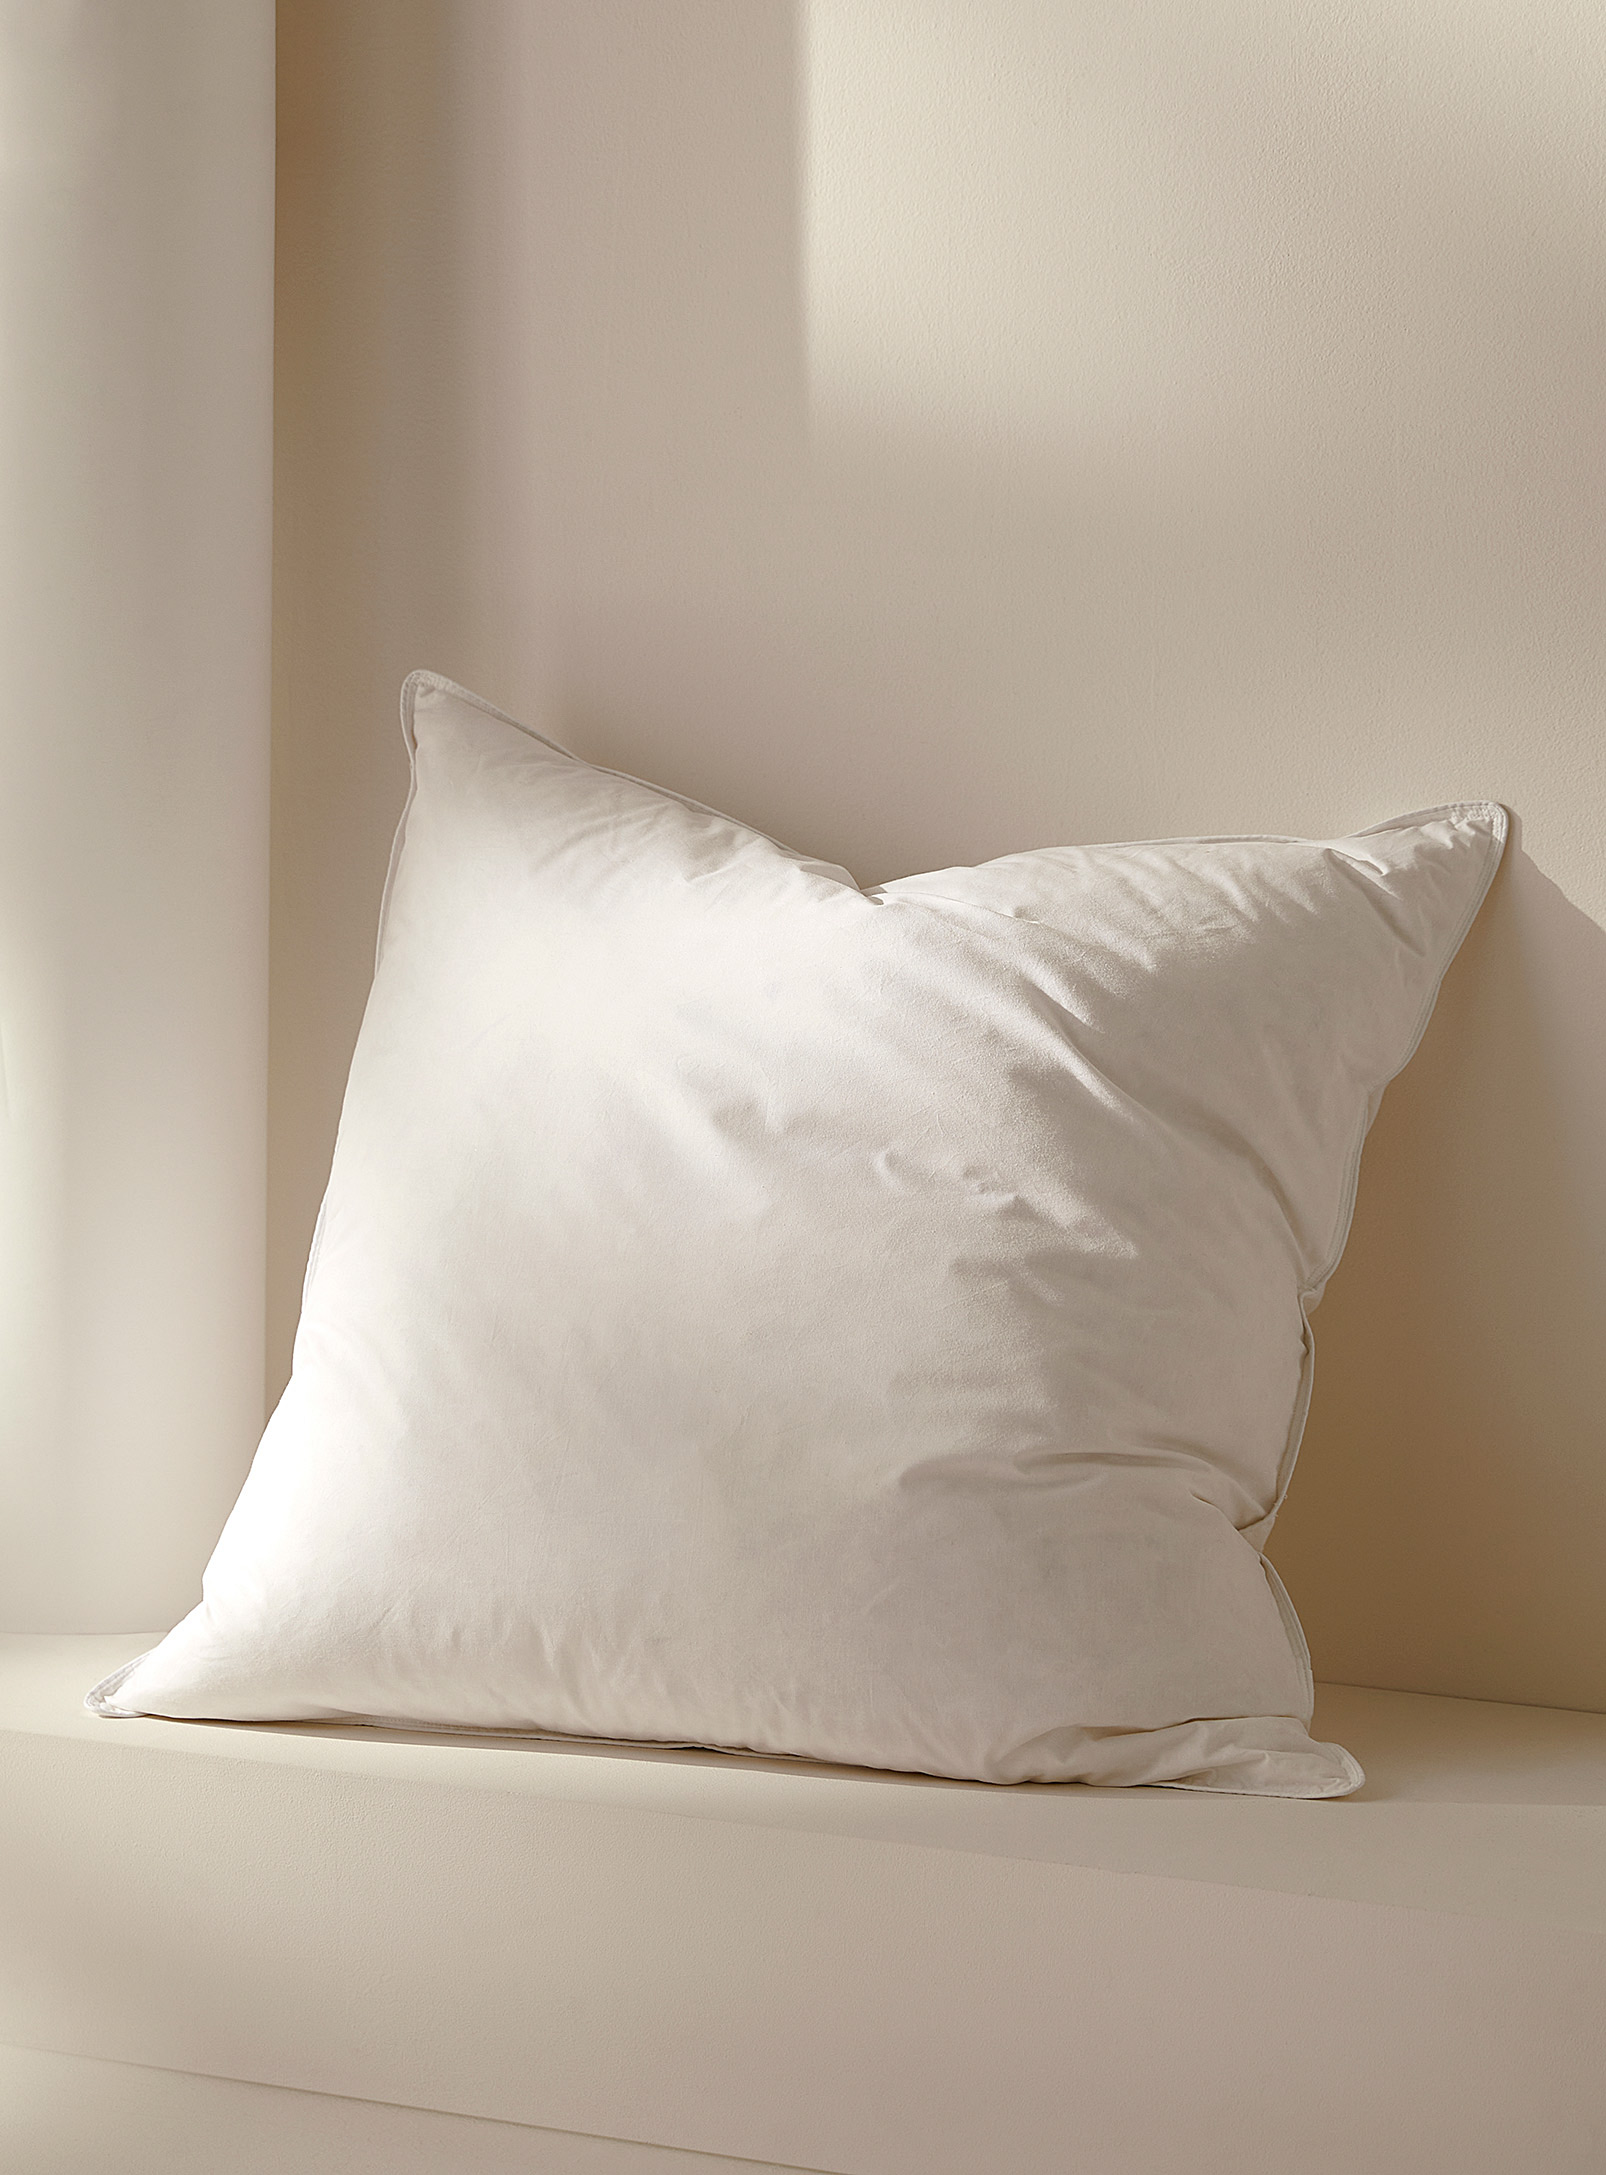 Simons Maison - Boreal Euro pillow Certified responsible feathers